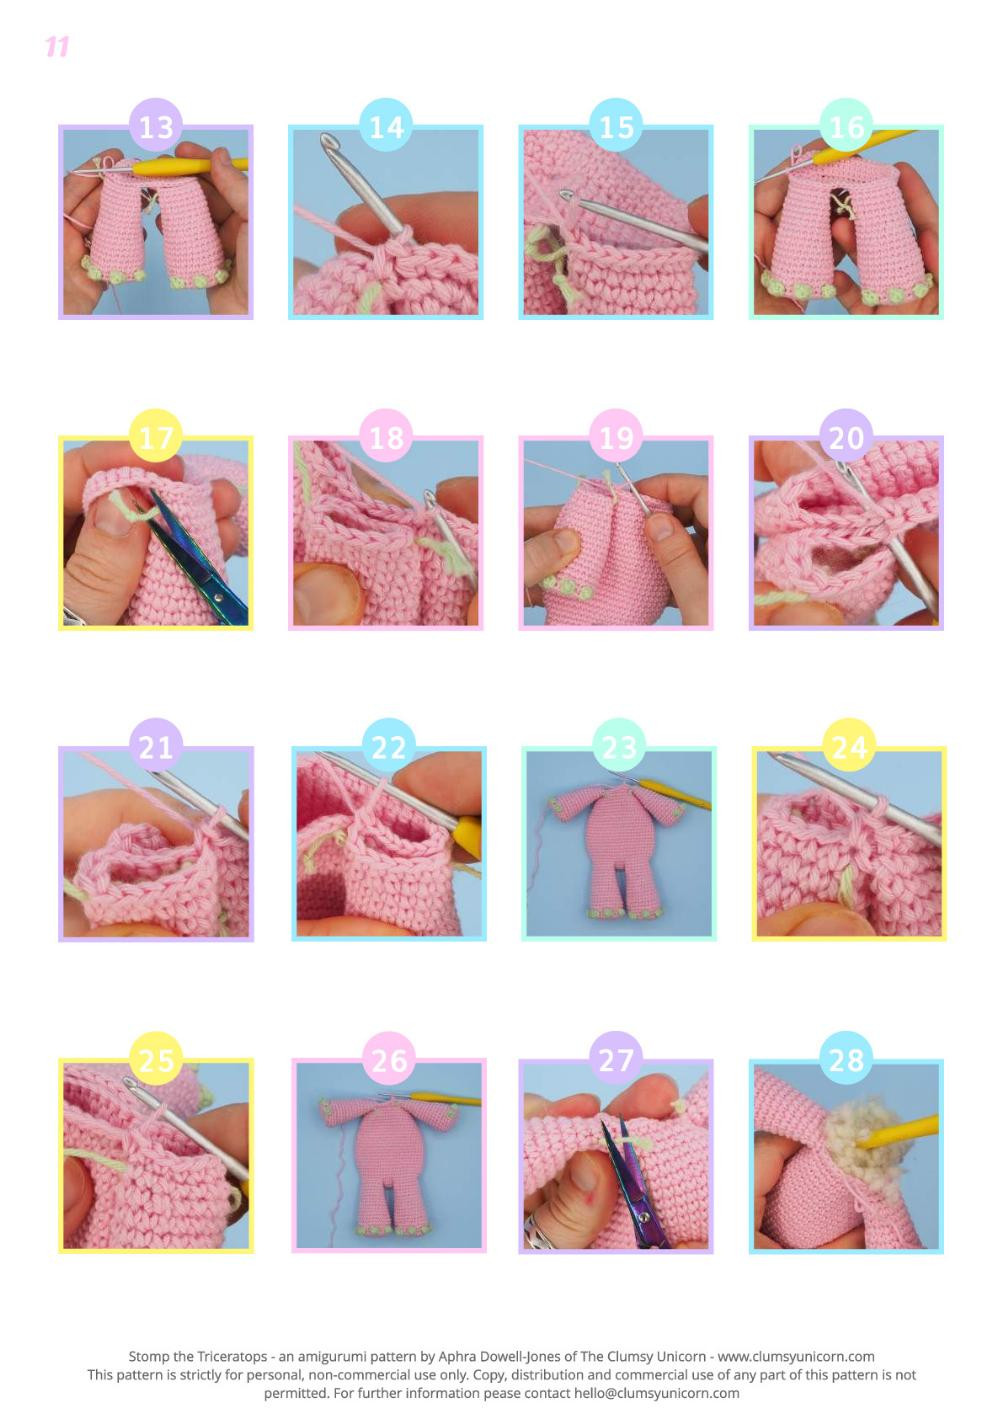 The Clumsy Unicorn crochet pattern